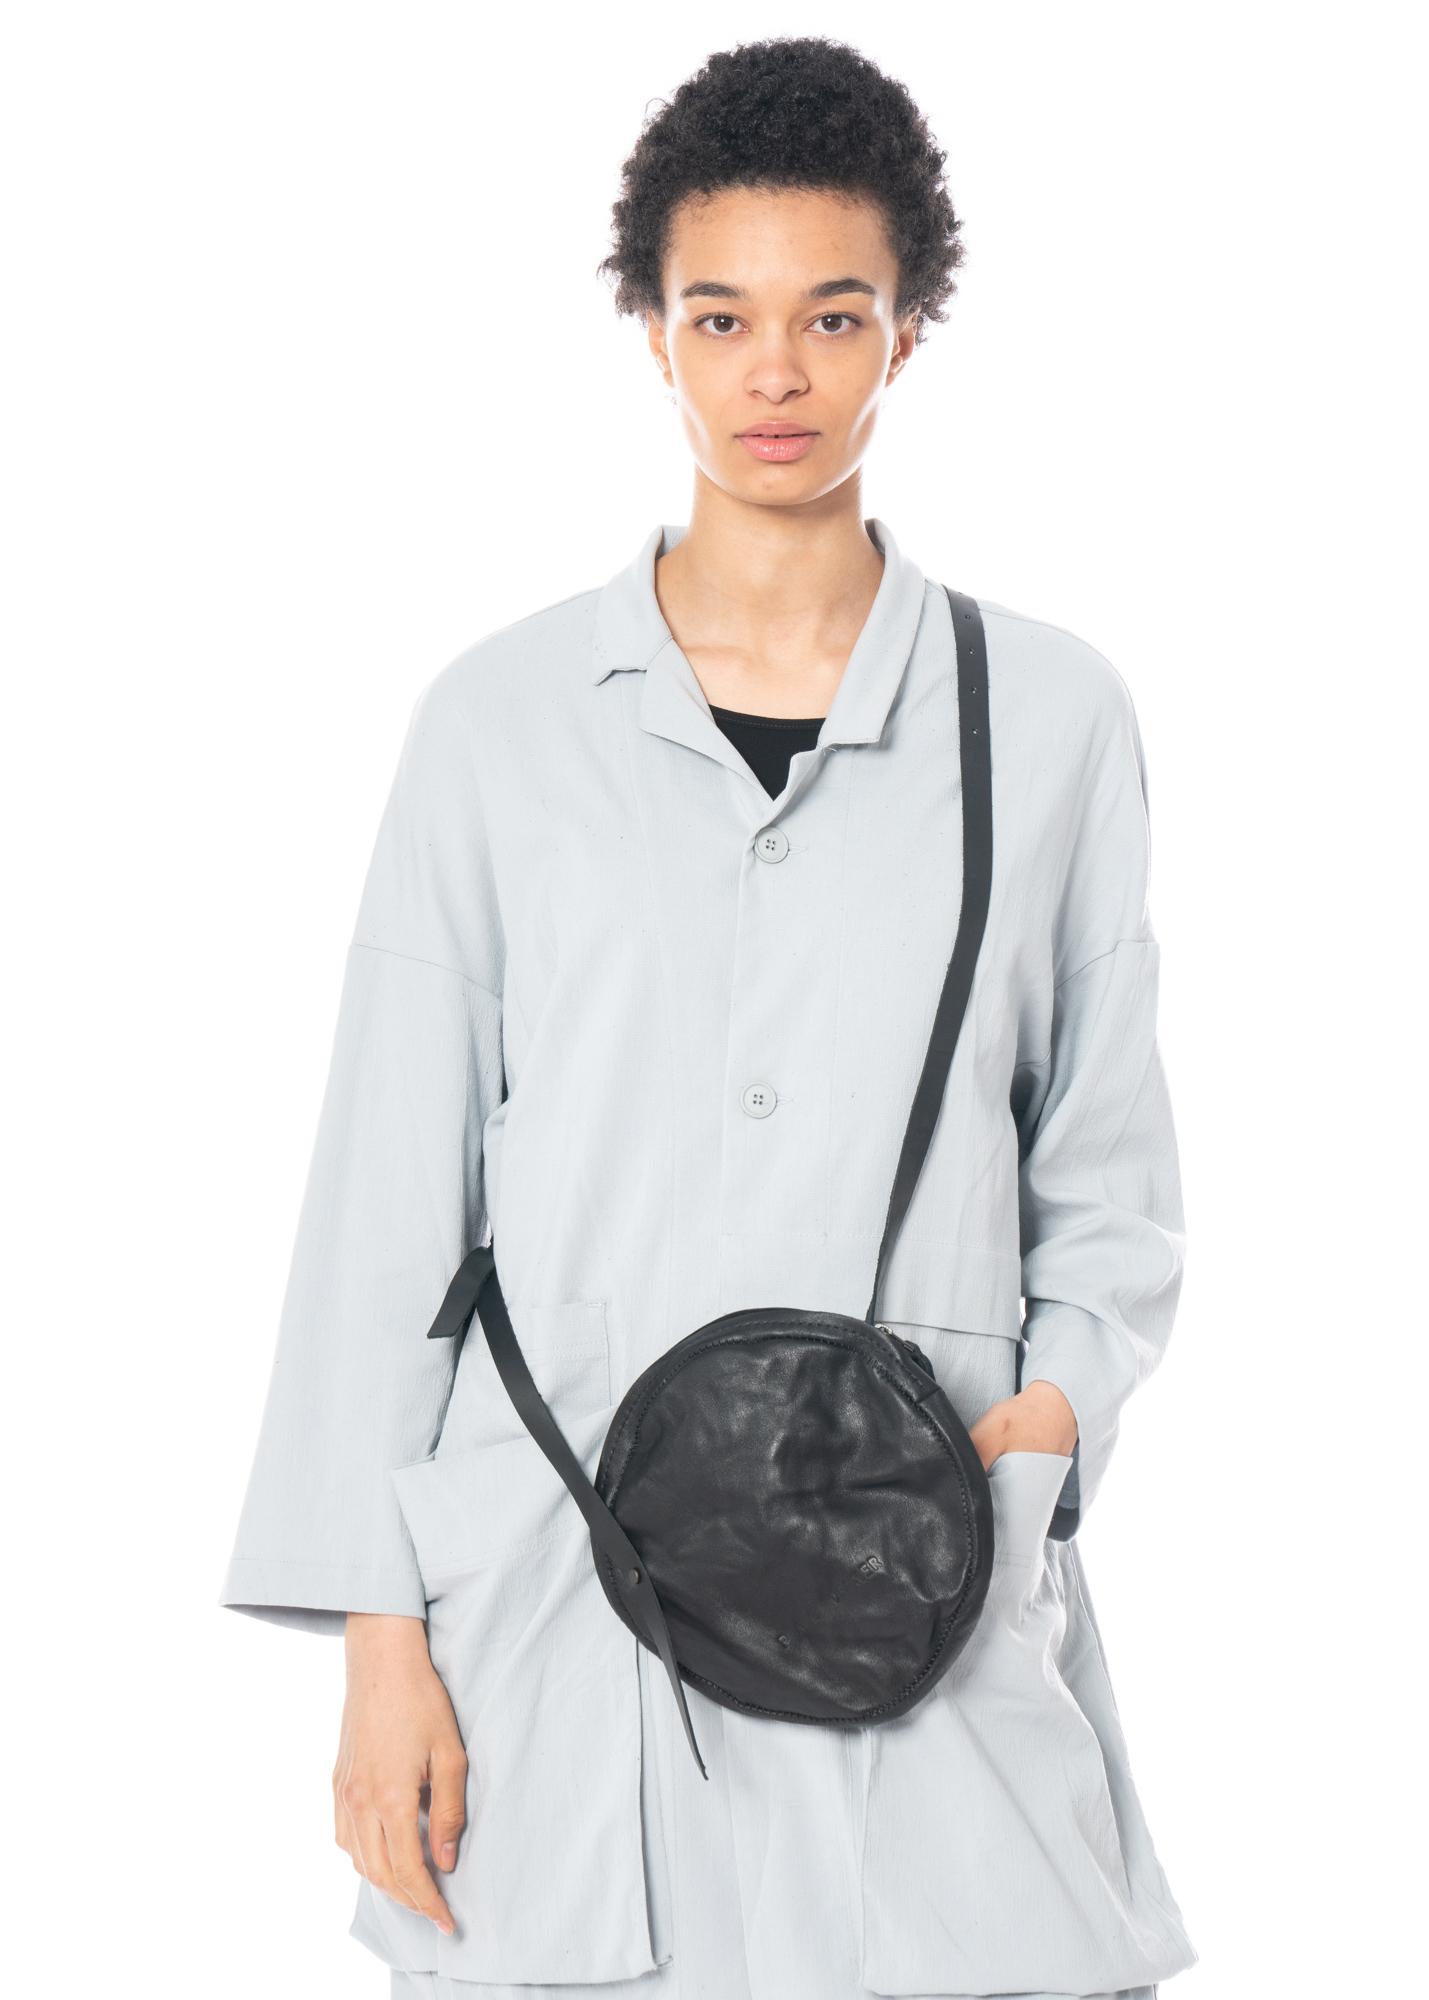 PAL OFFNER, Innovative Leather Bag with Circle Shape| NOBANANAS